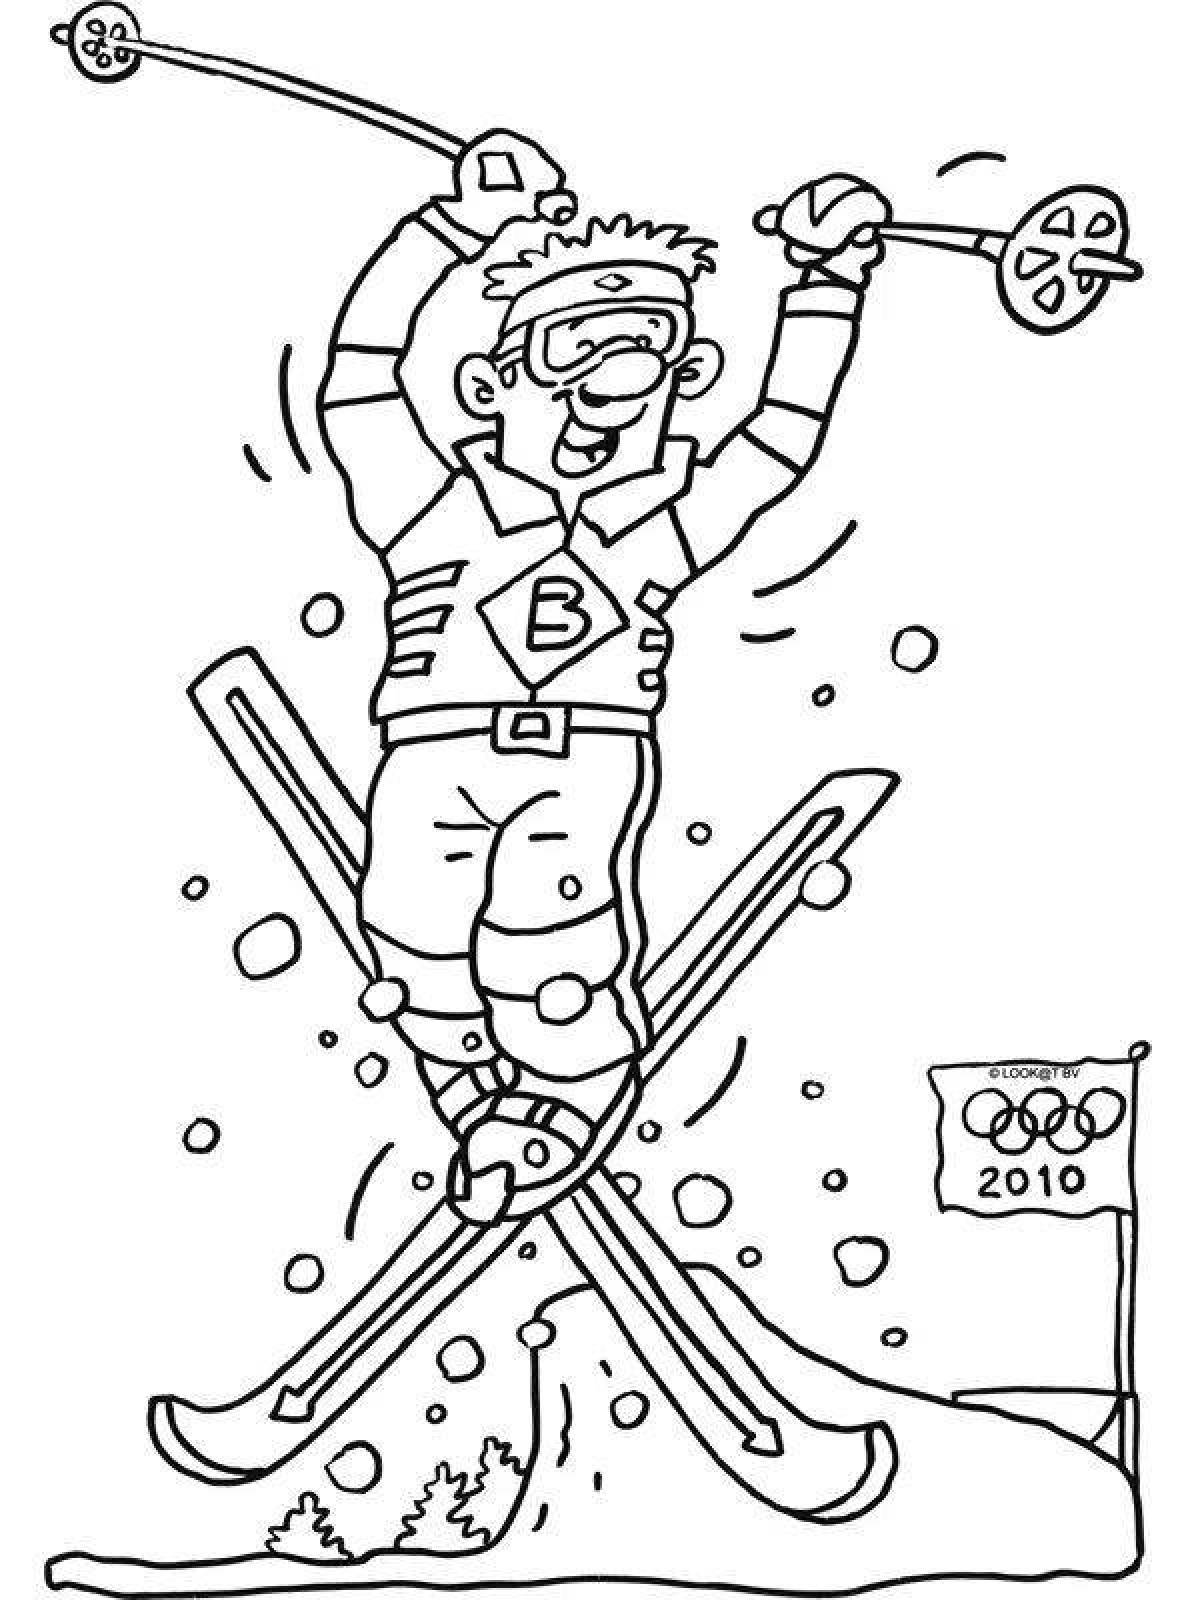 лыжник биатлонист